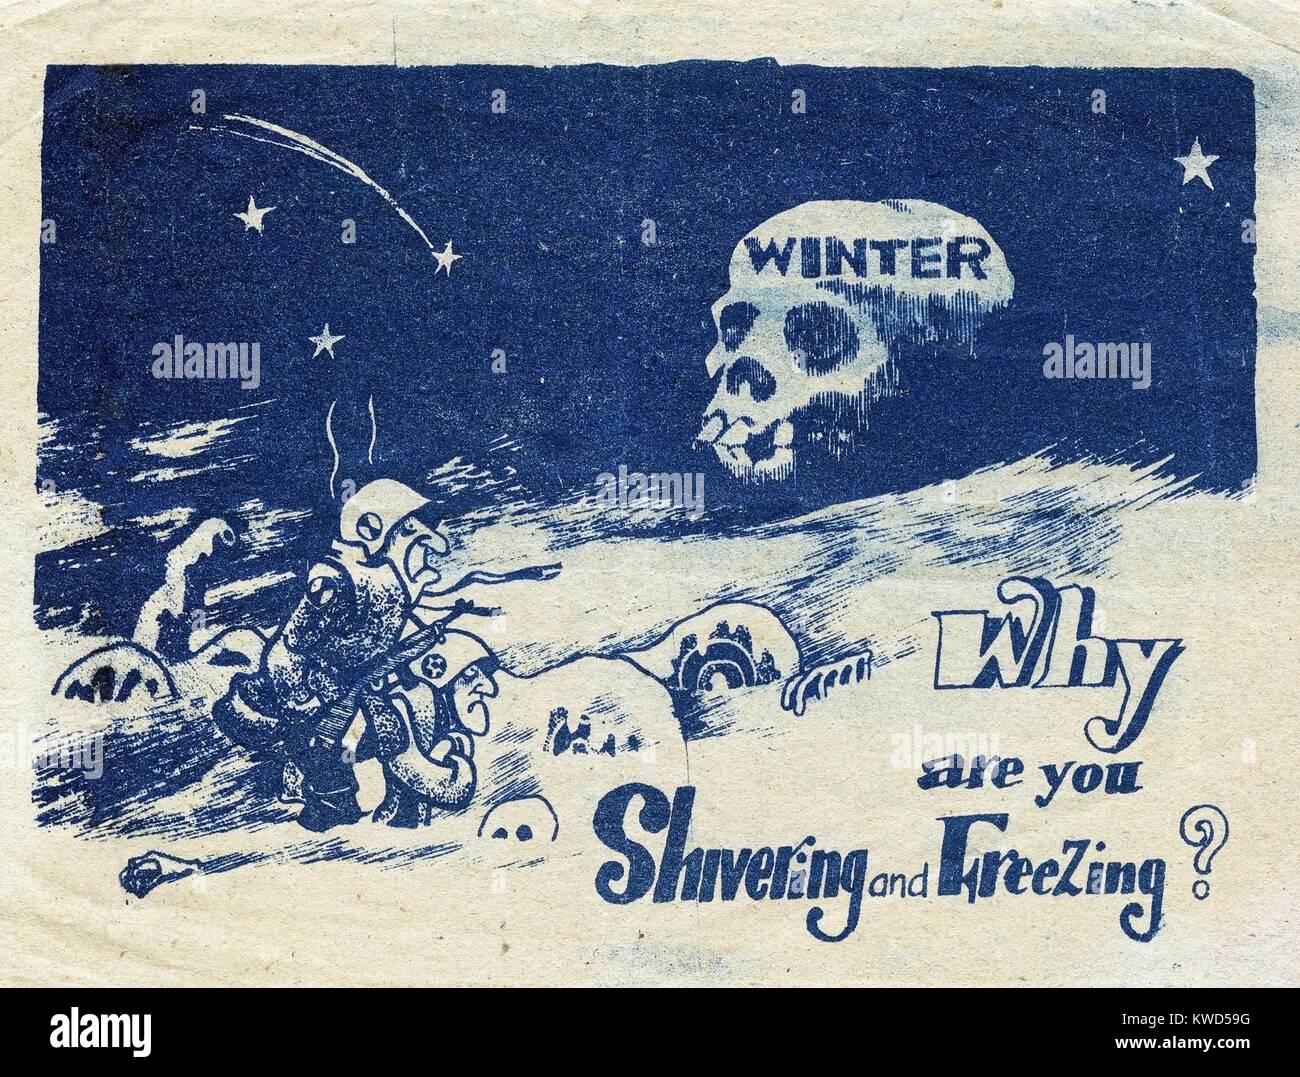 Cold war cartoon hi-res stock photography and images - Alamy